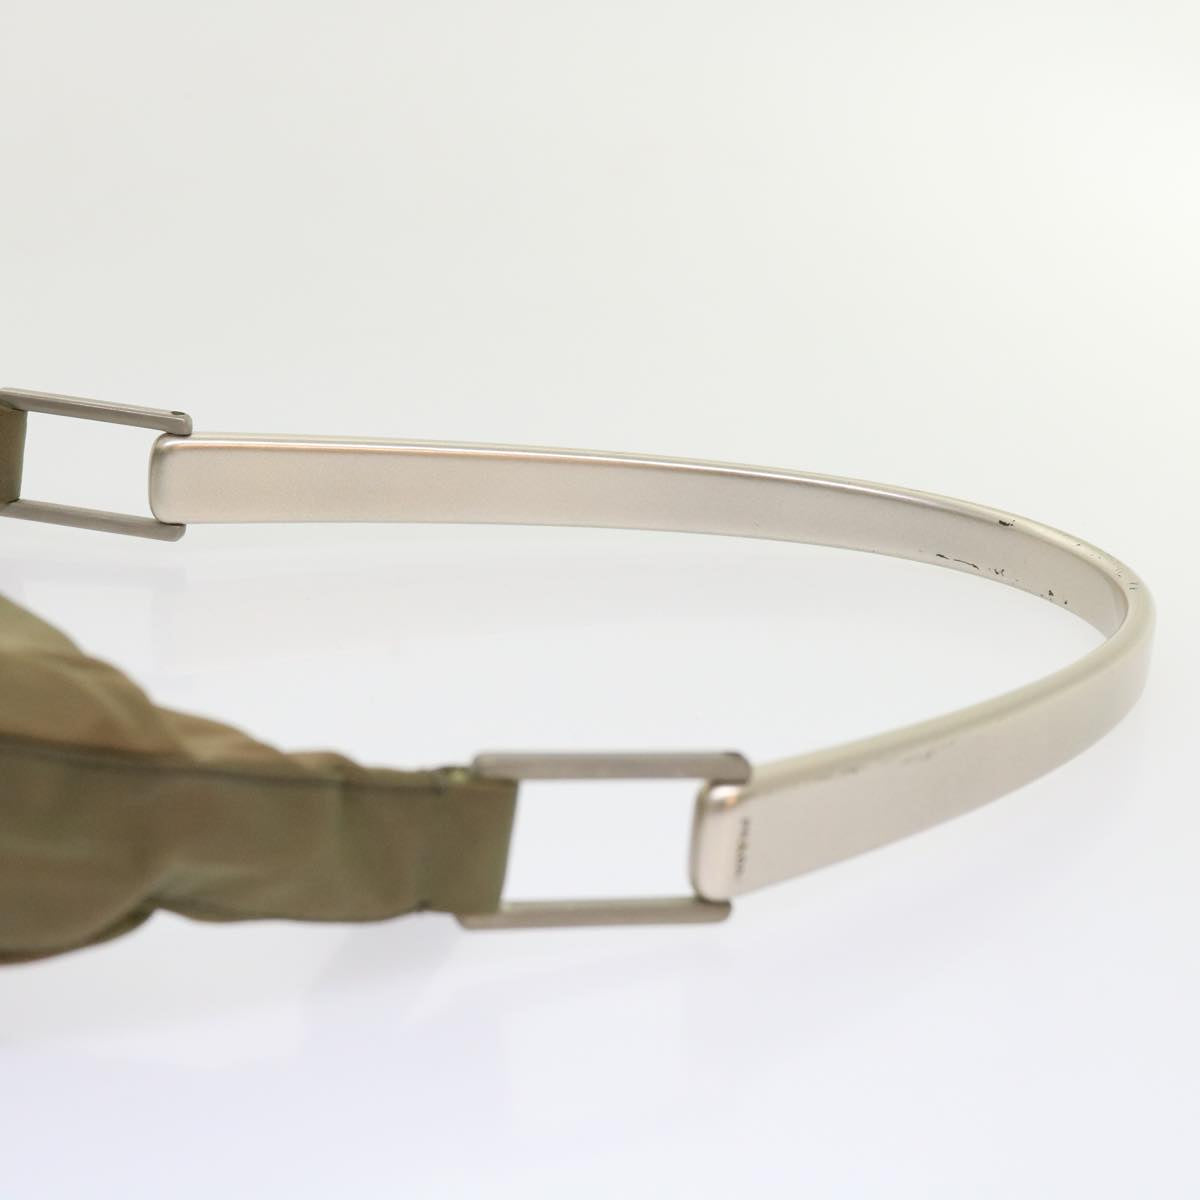 PRADA Shoulder Bag Nylon Khaki Auth cl628